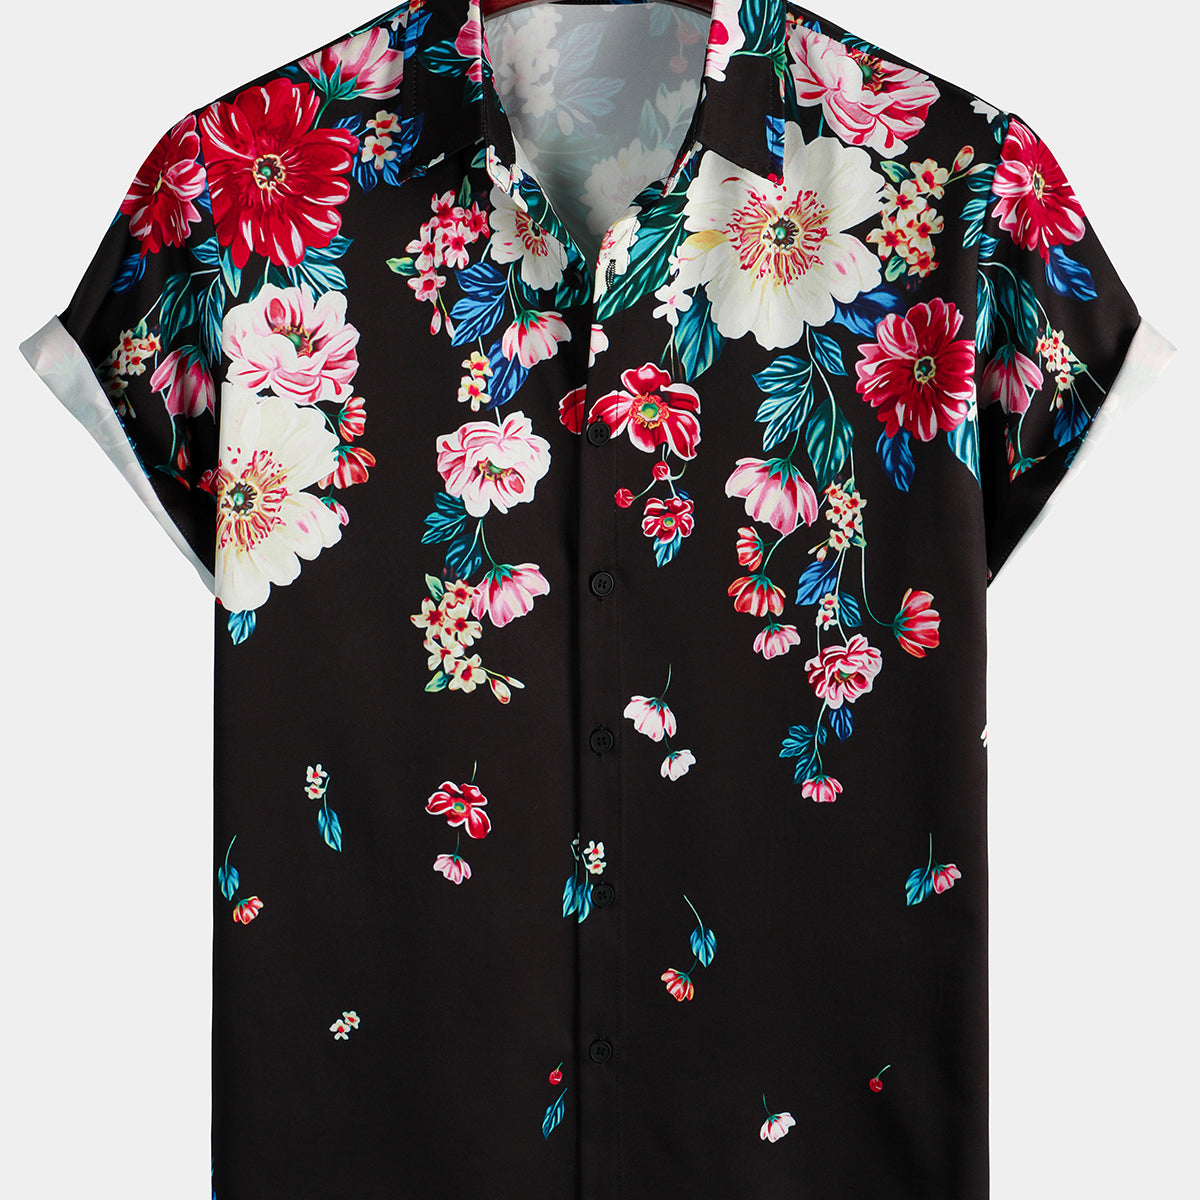 Men's Floral Print Summer Casual vintage Button Up Black Short Sleeve Shirt